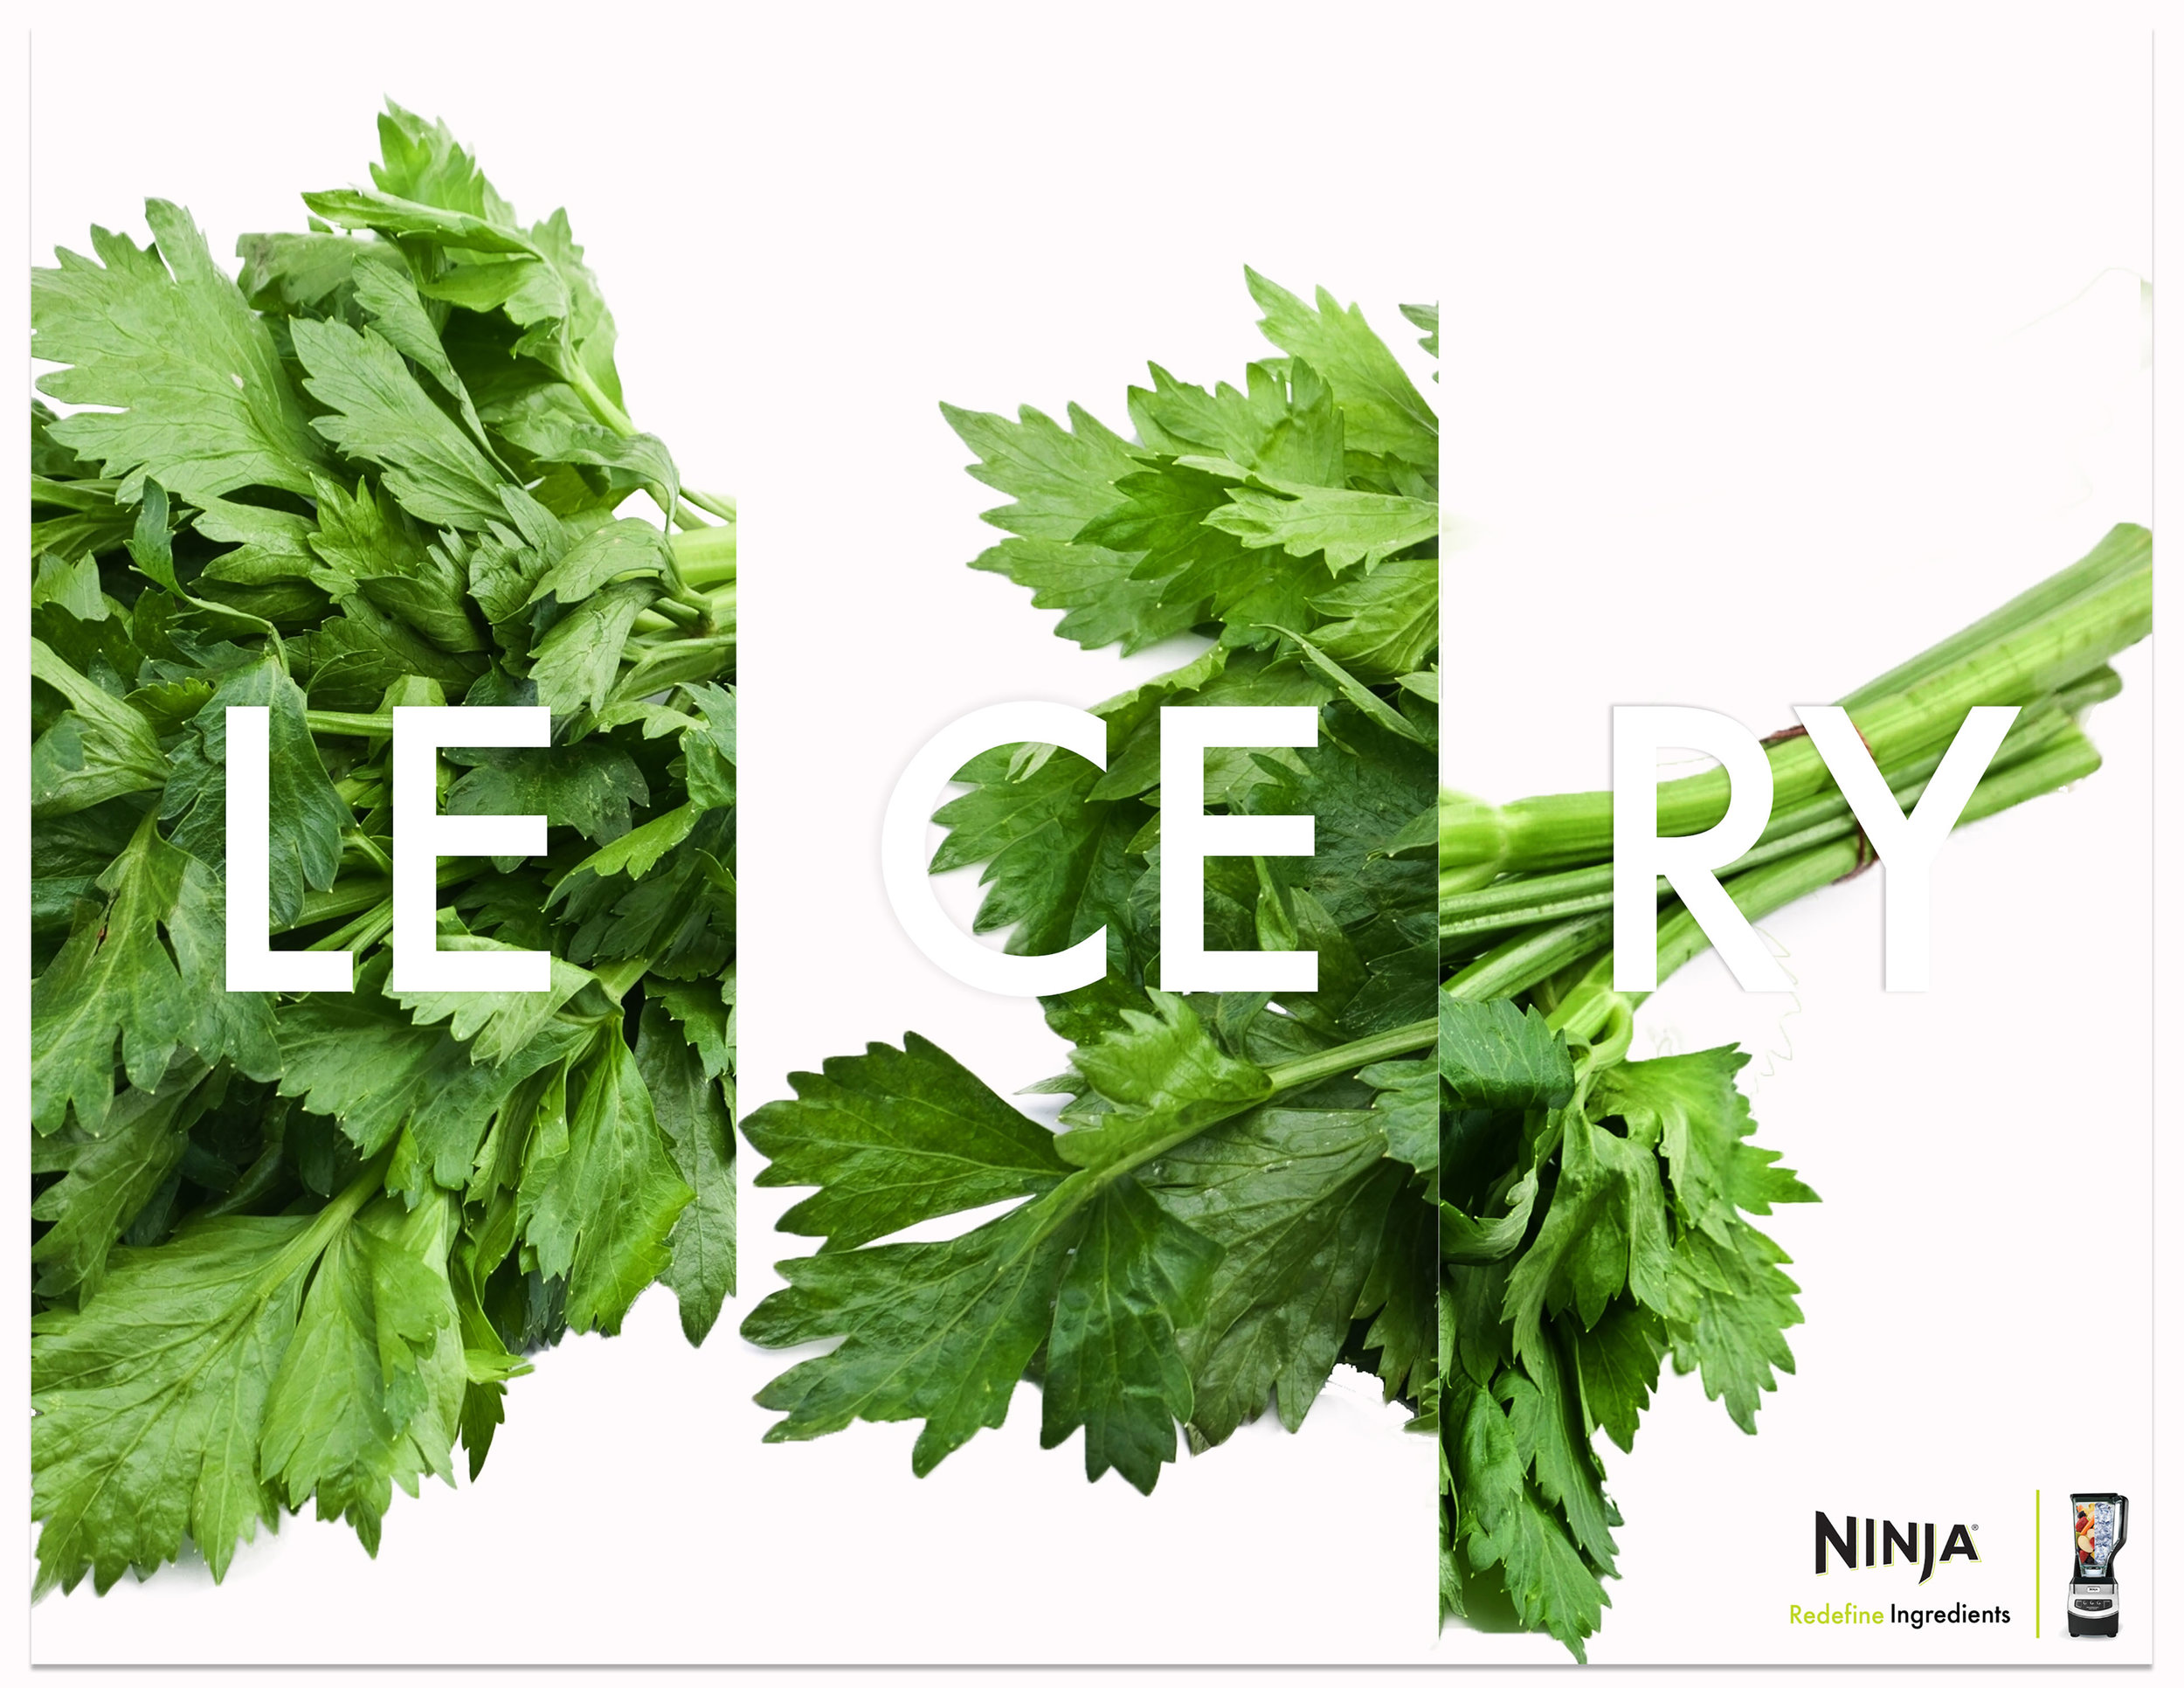 NINJA|Redefine|celery|HD2.jpg